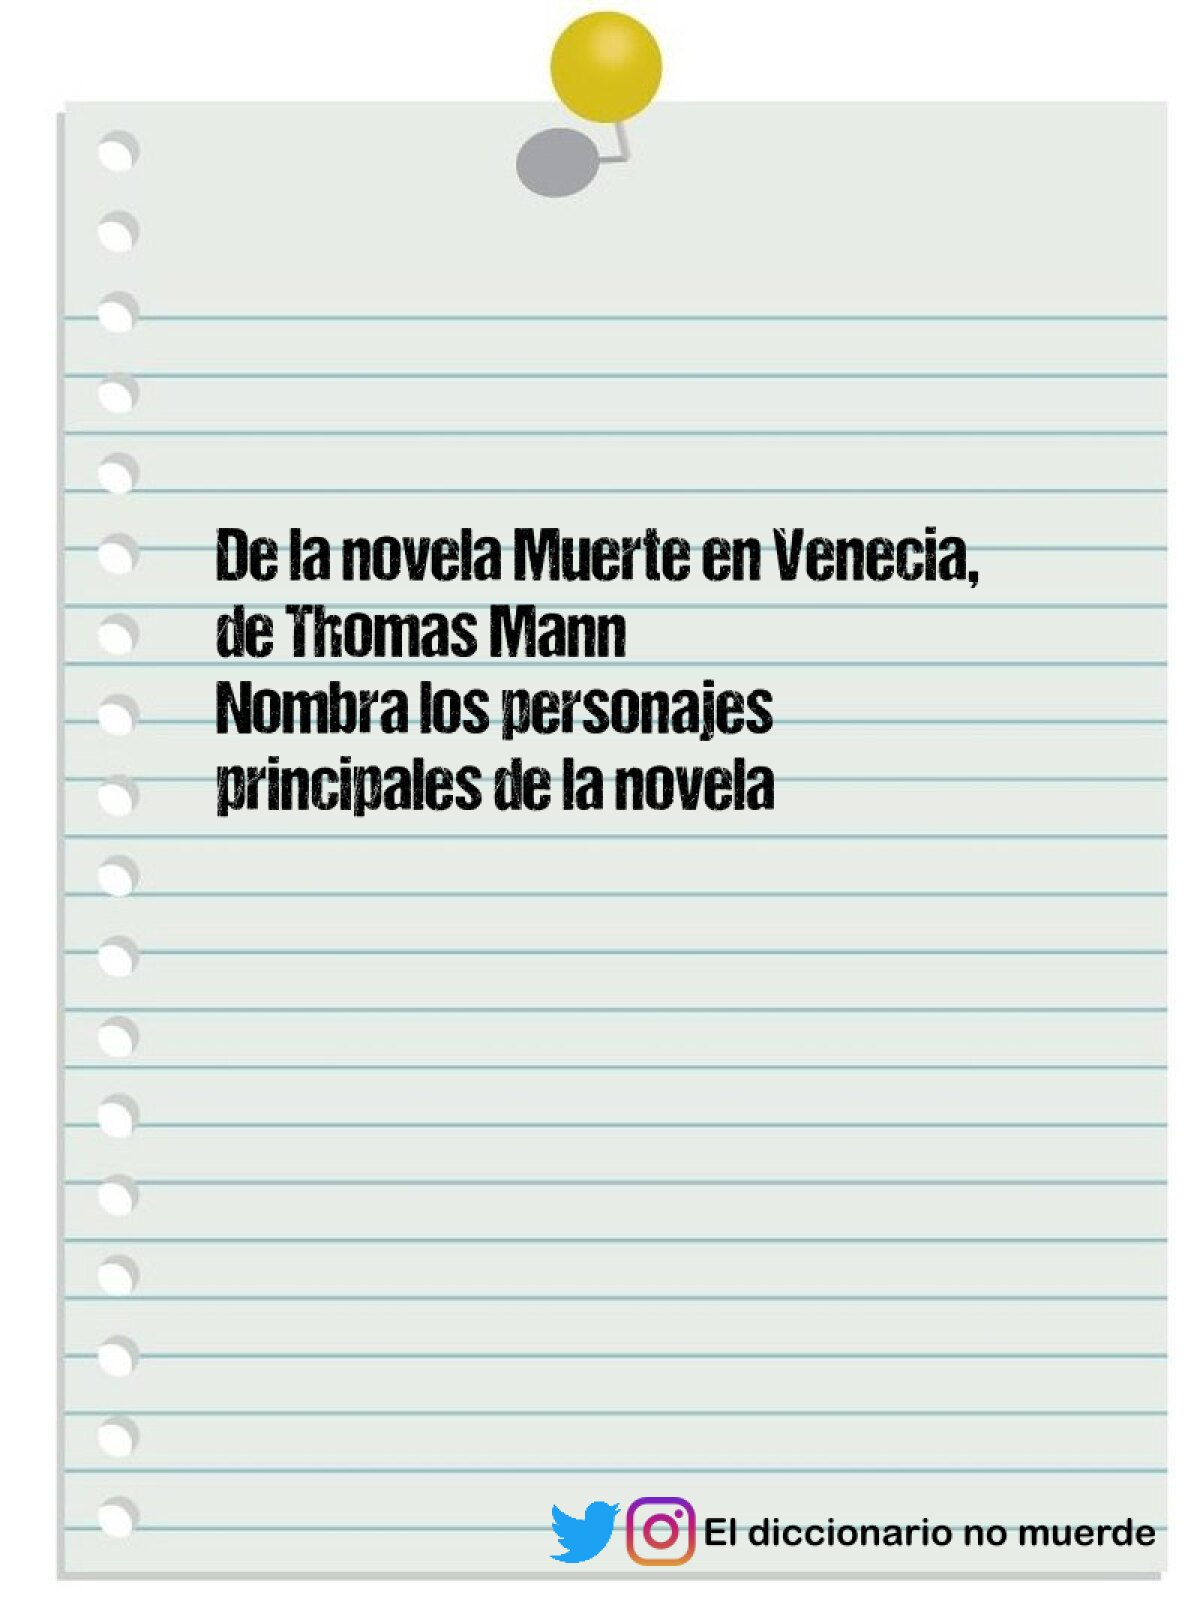 De la novela Muerte en Venecia, de Thomas Mann
Nombra los personajes principales de la novela